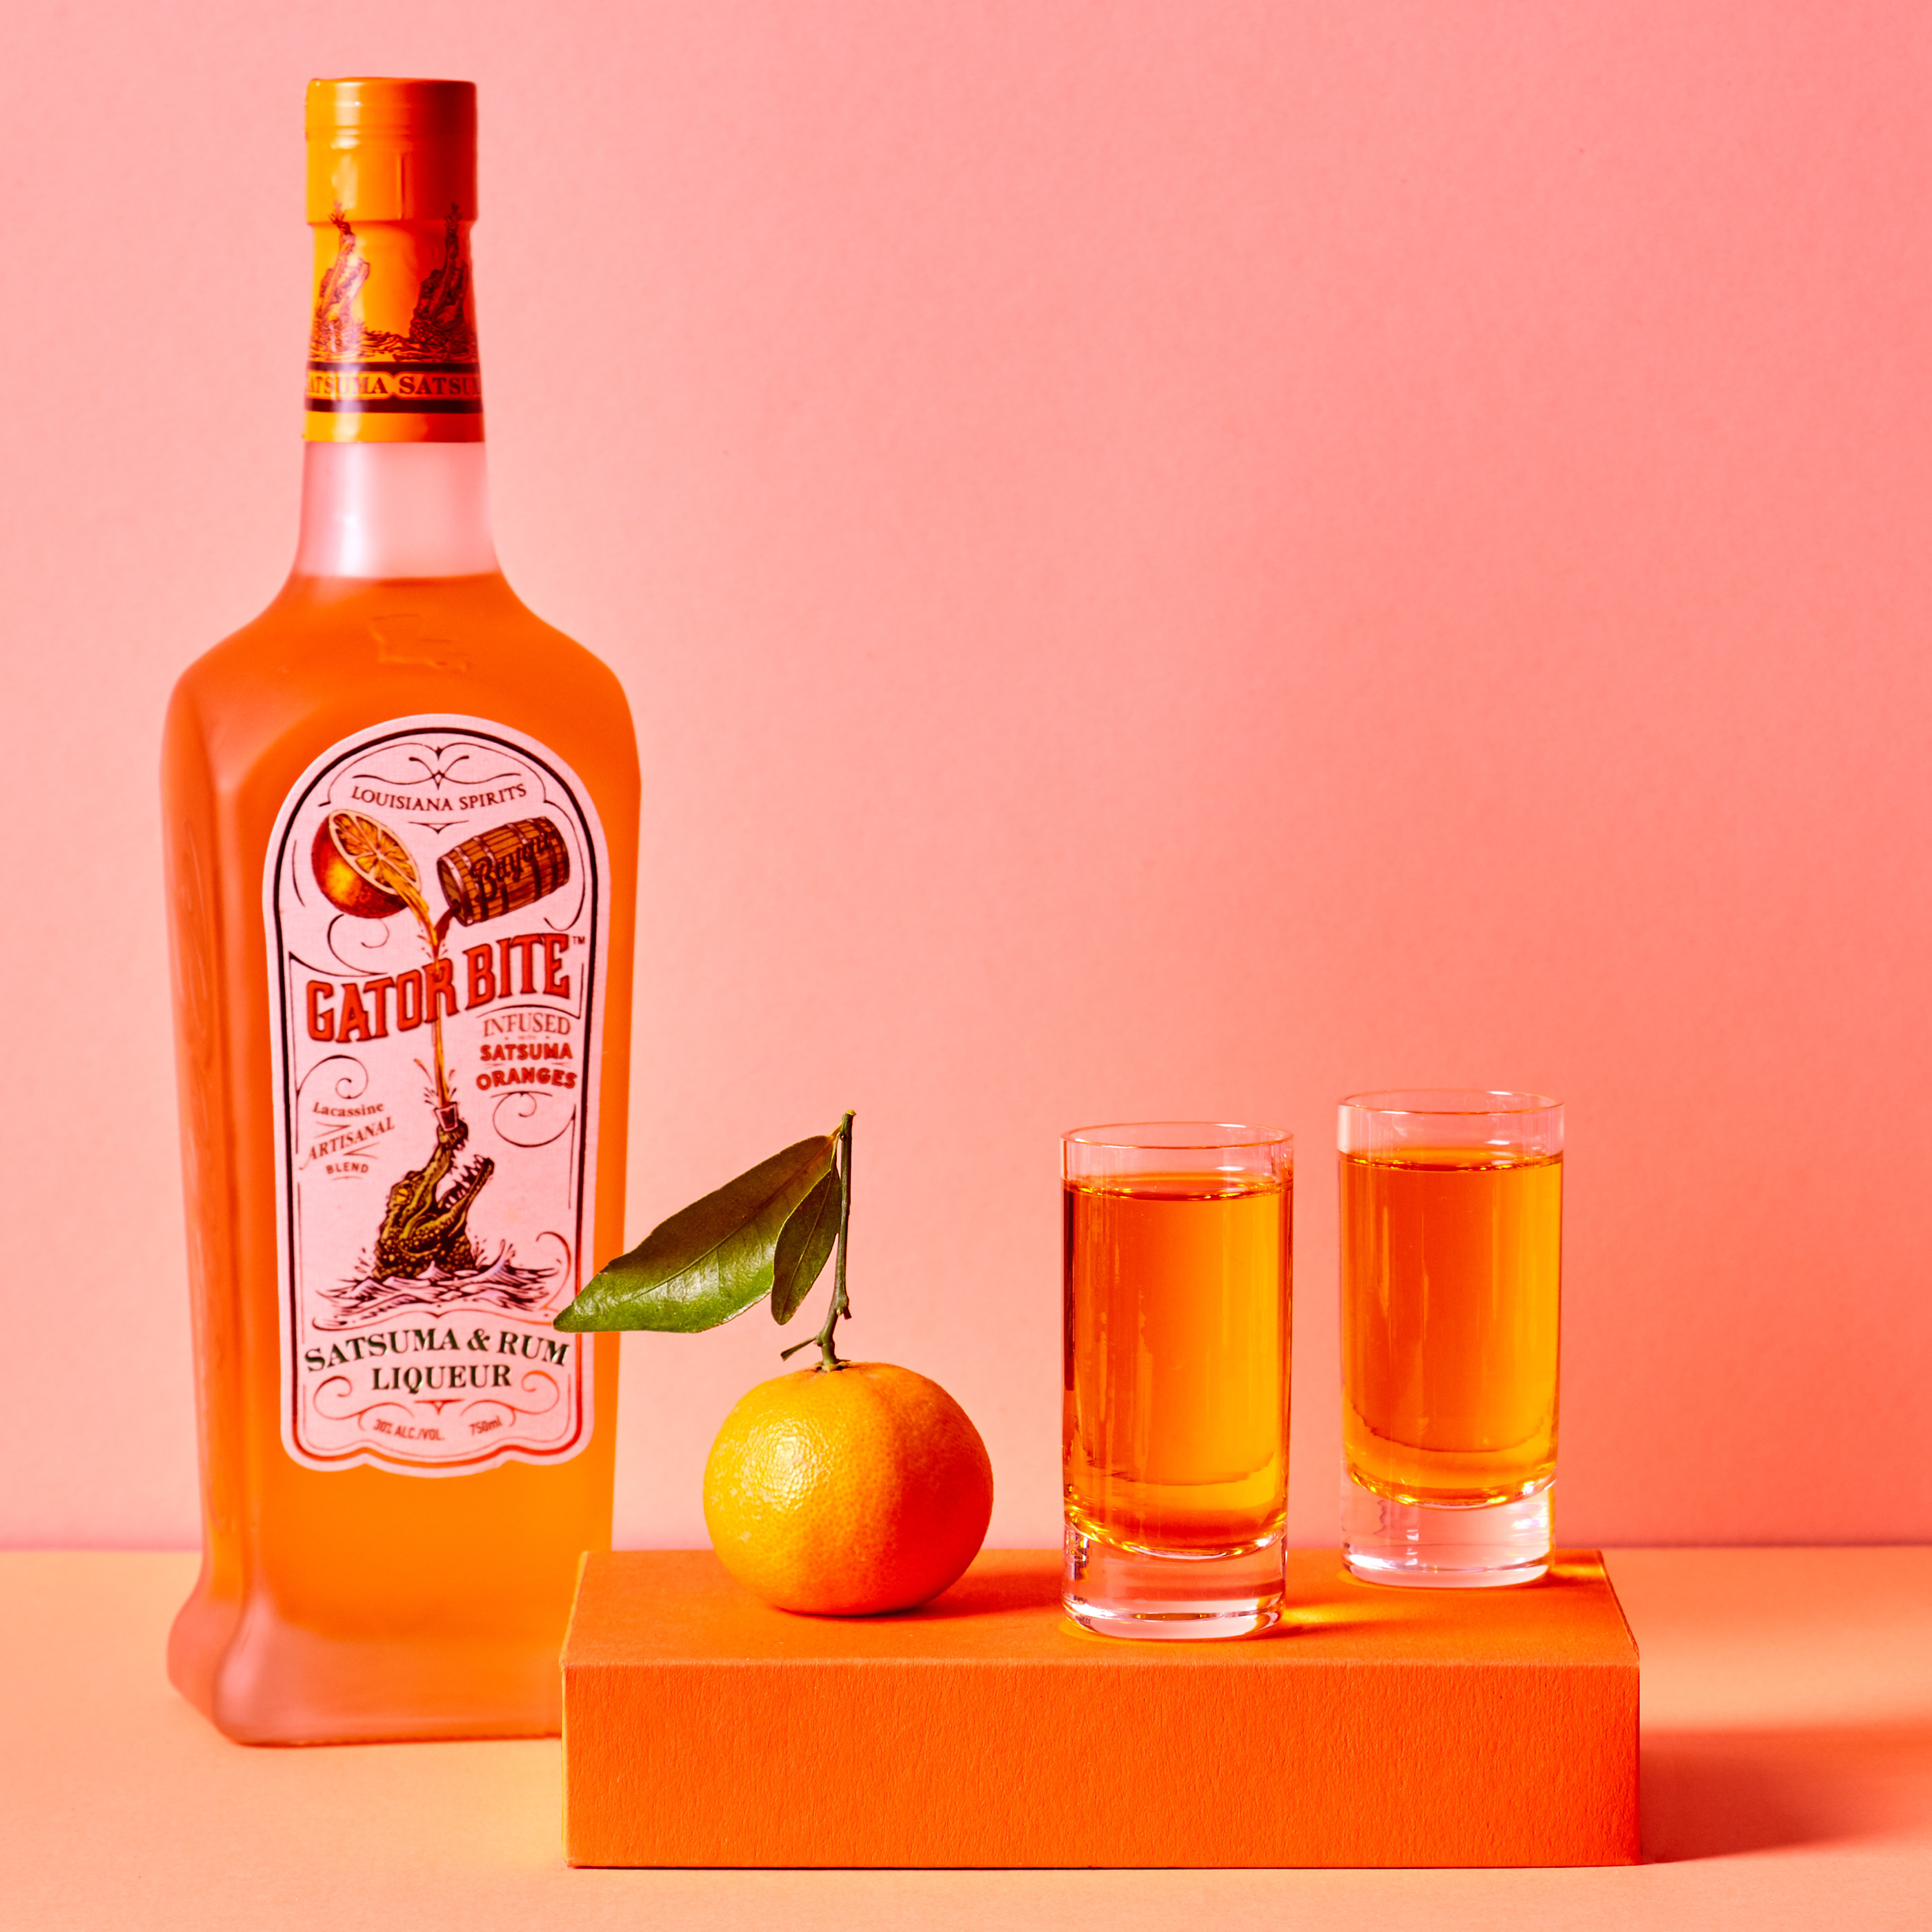 Ликер Gator Bite Satsuma and Rum Liqueur 0,7л 30% в Украине